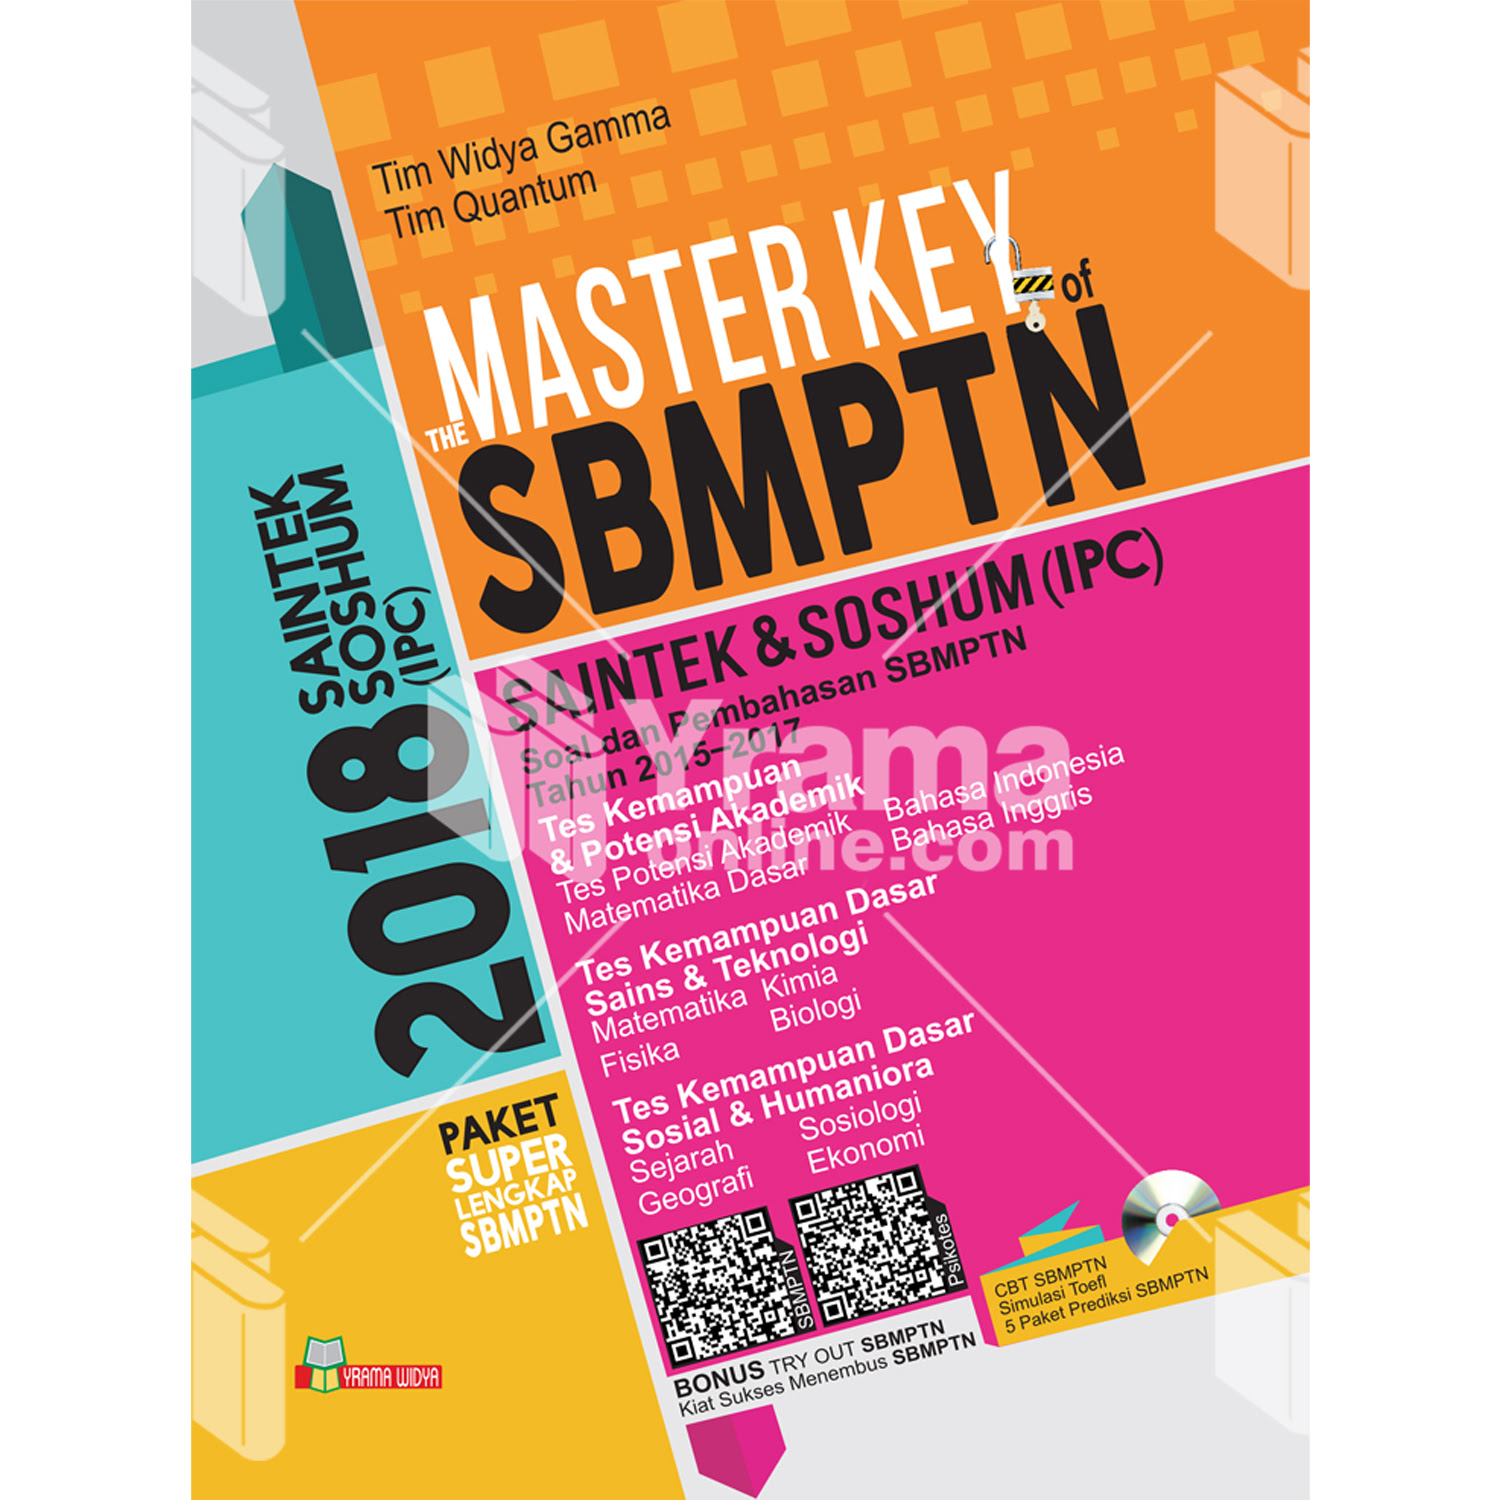 Buku Master Key Sbmptn Saintek Dan Soshum Ipc 2018